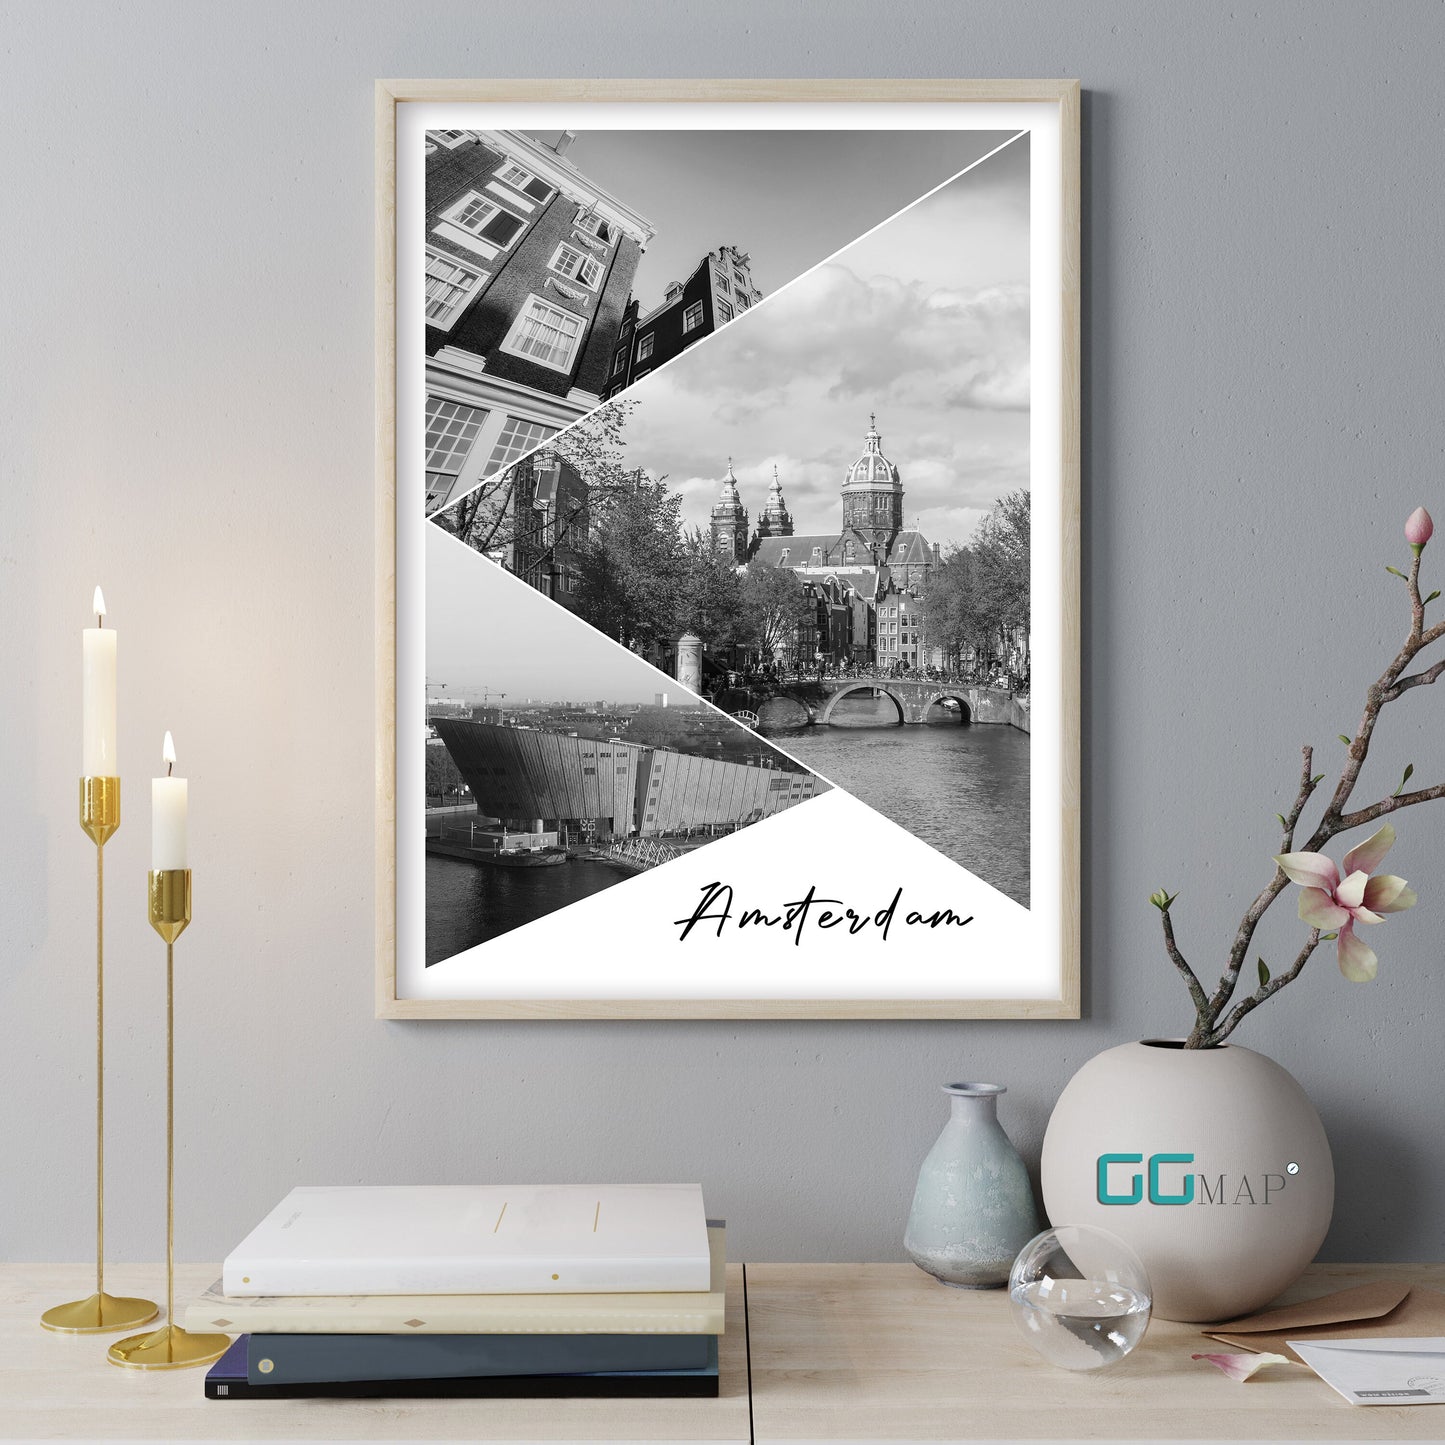 AMSTERDAM Story - Amsterdam poster - Wall art - Home decor - Digital Print